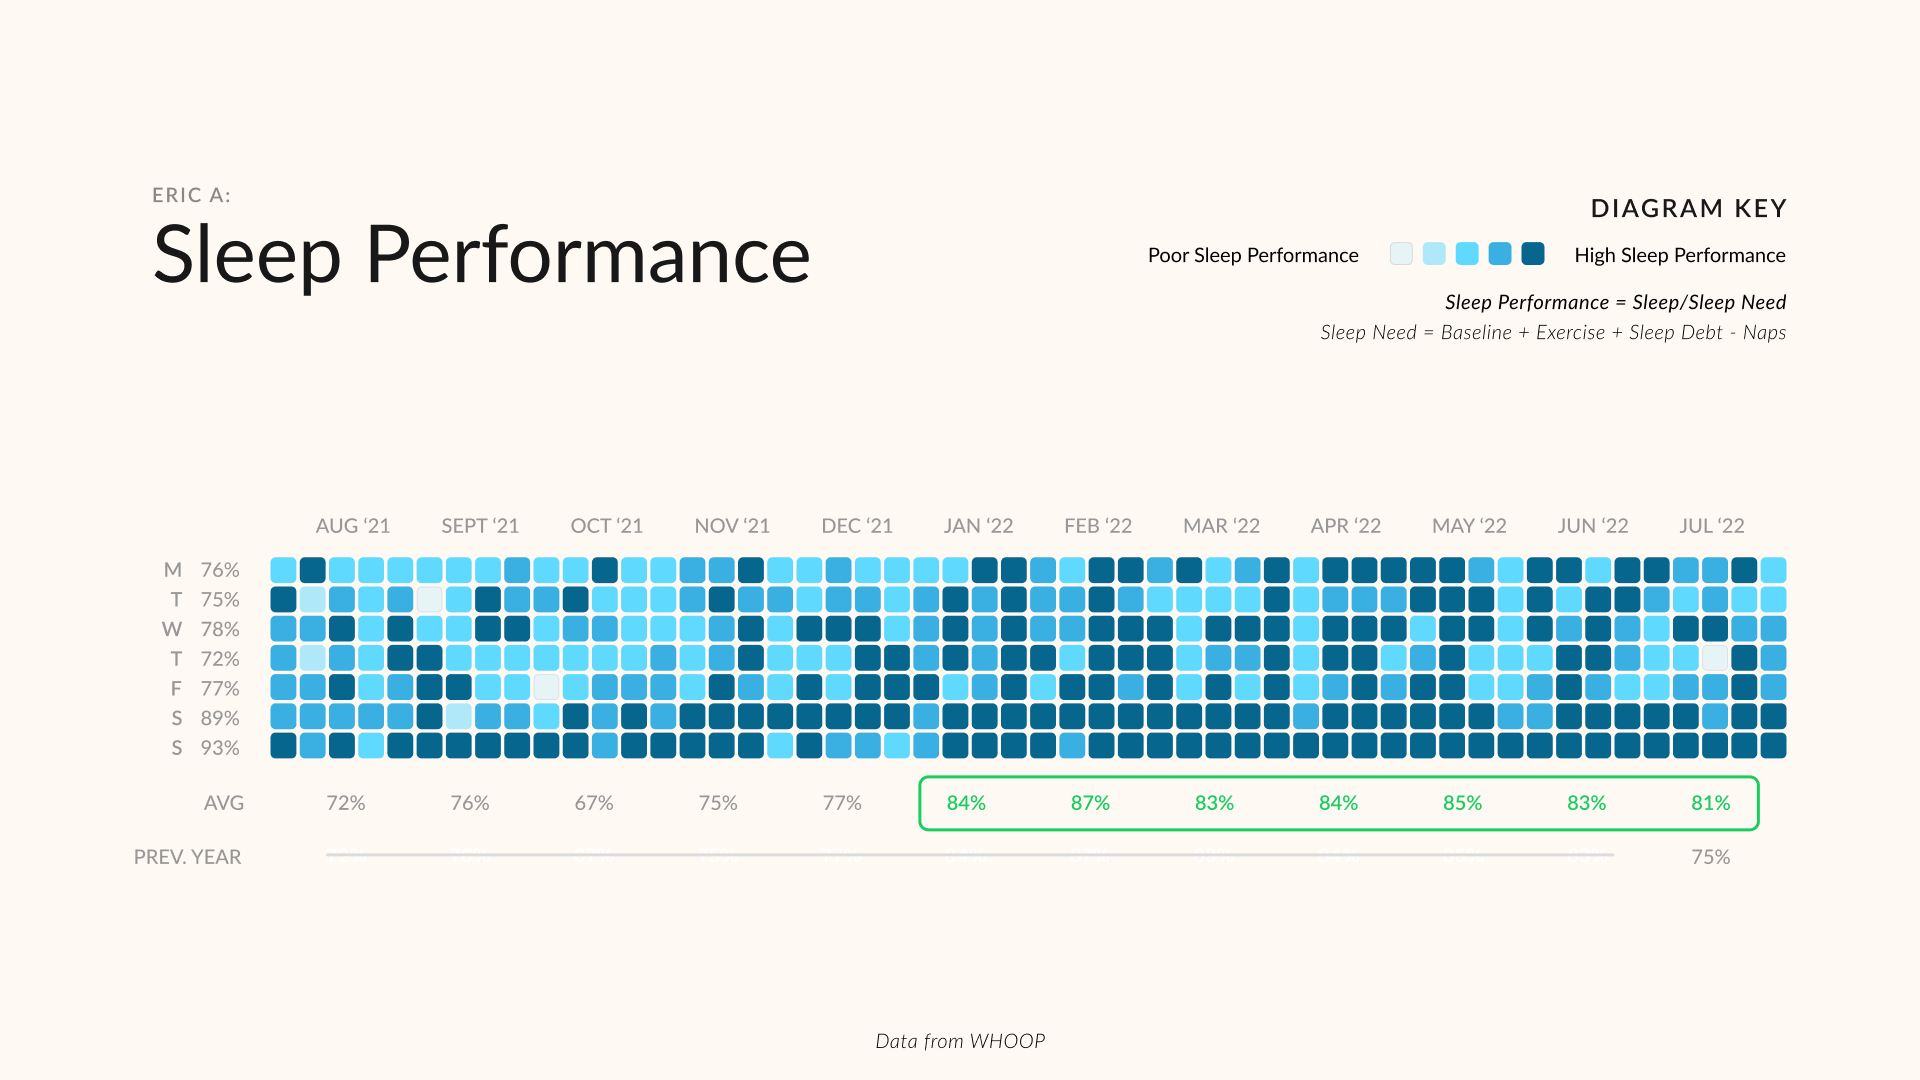 Eric Sleep Performance over time